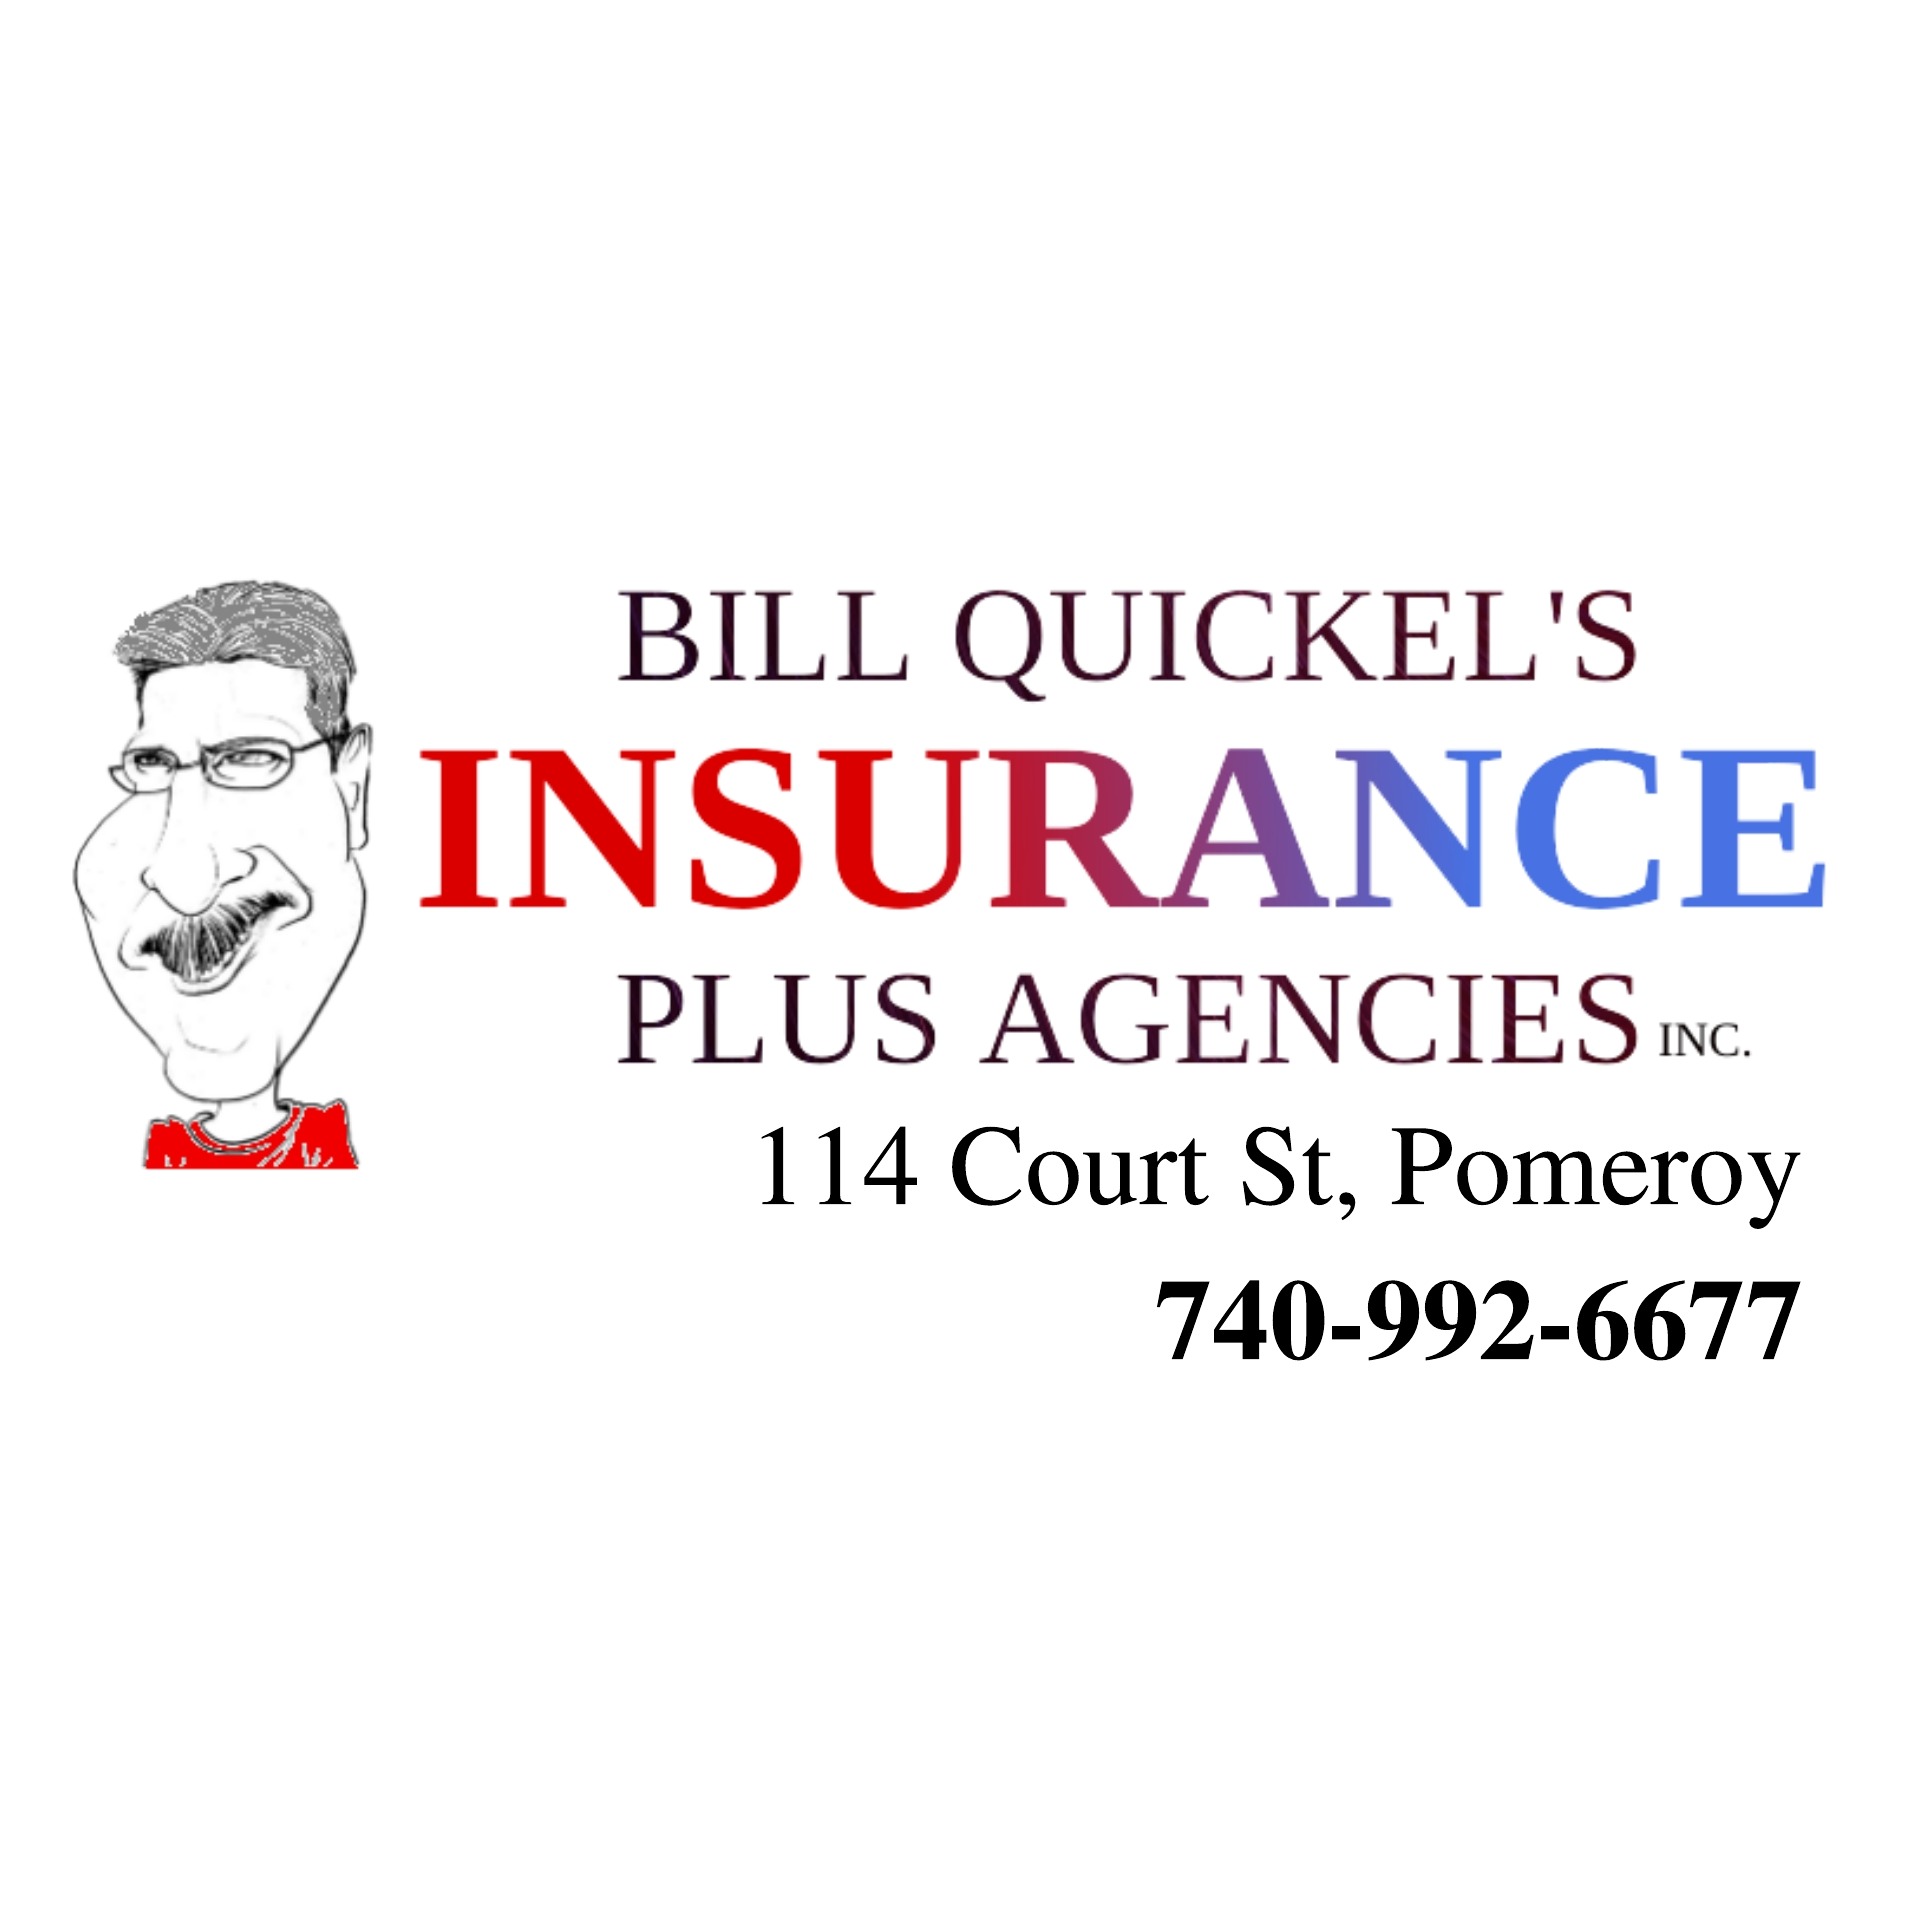 Bill Quickel's - Insurance Plus Agencies Inc.